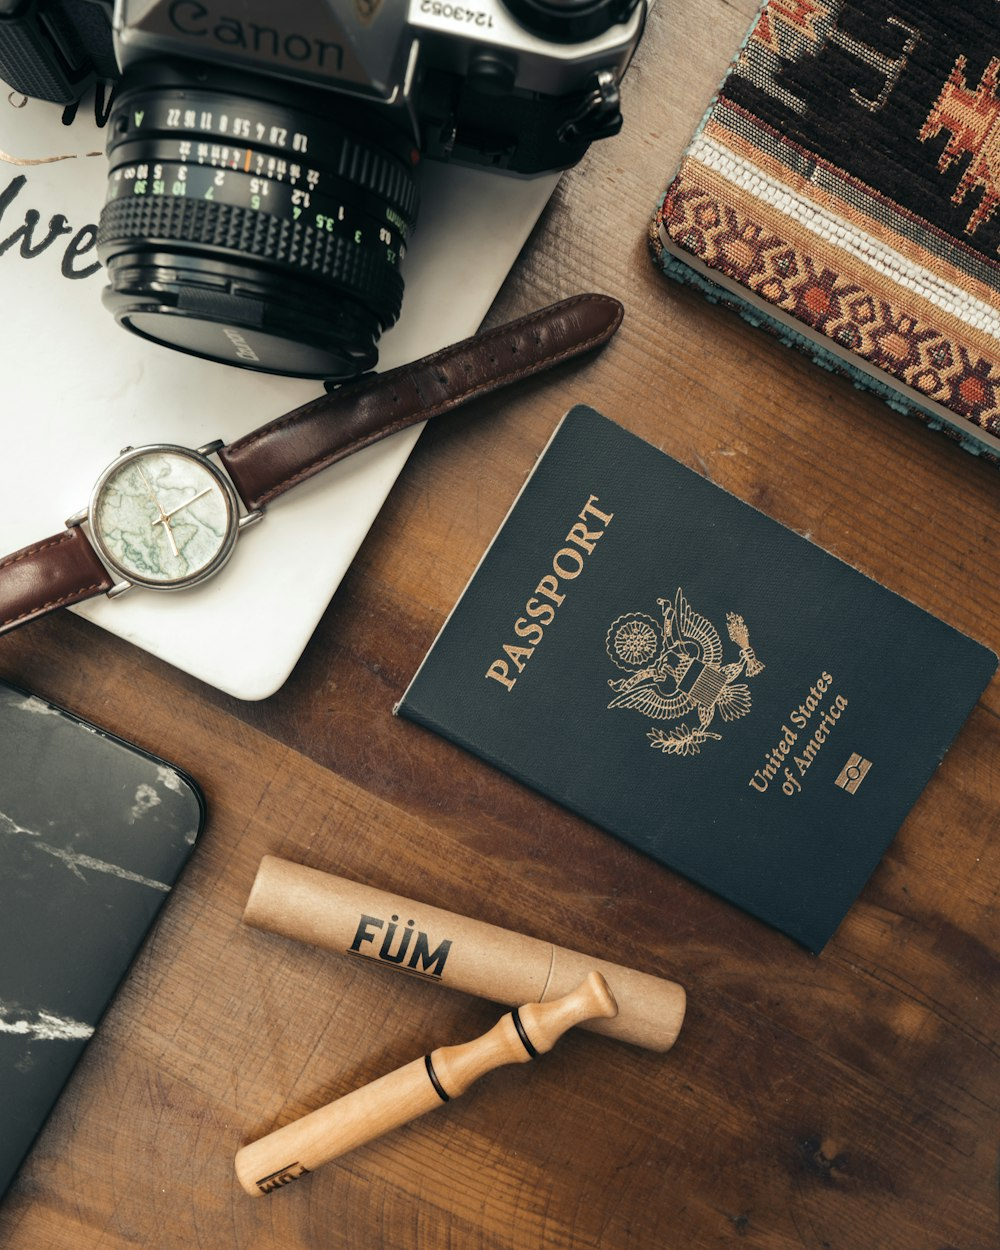 American passport, watch, camera, and travel essential